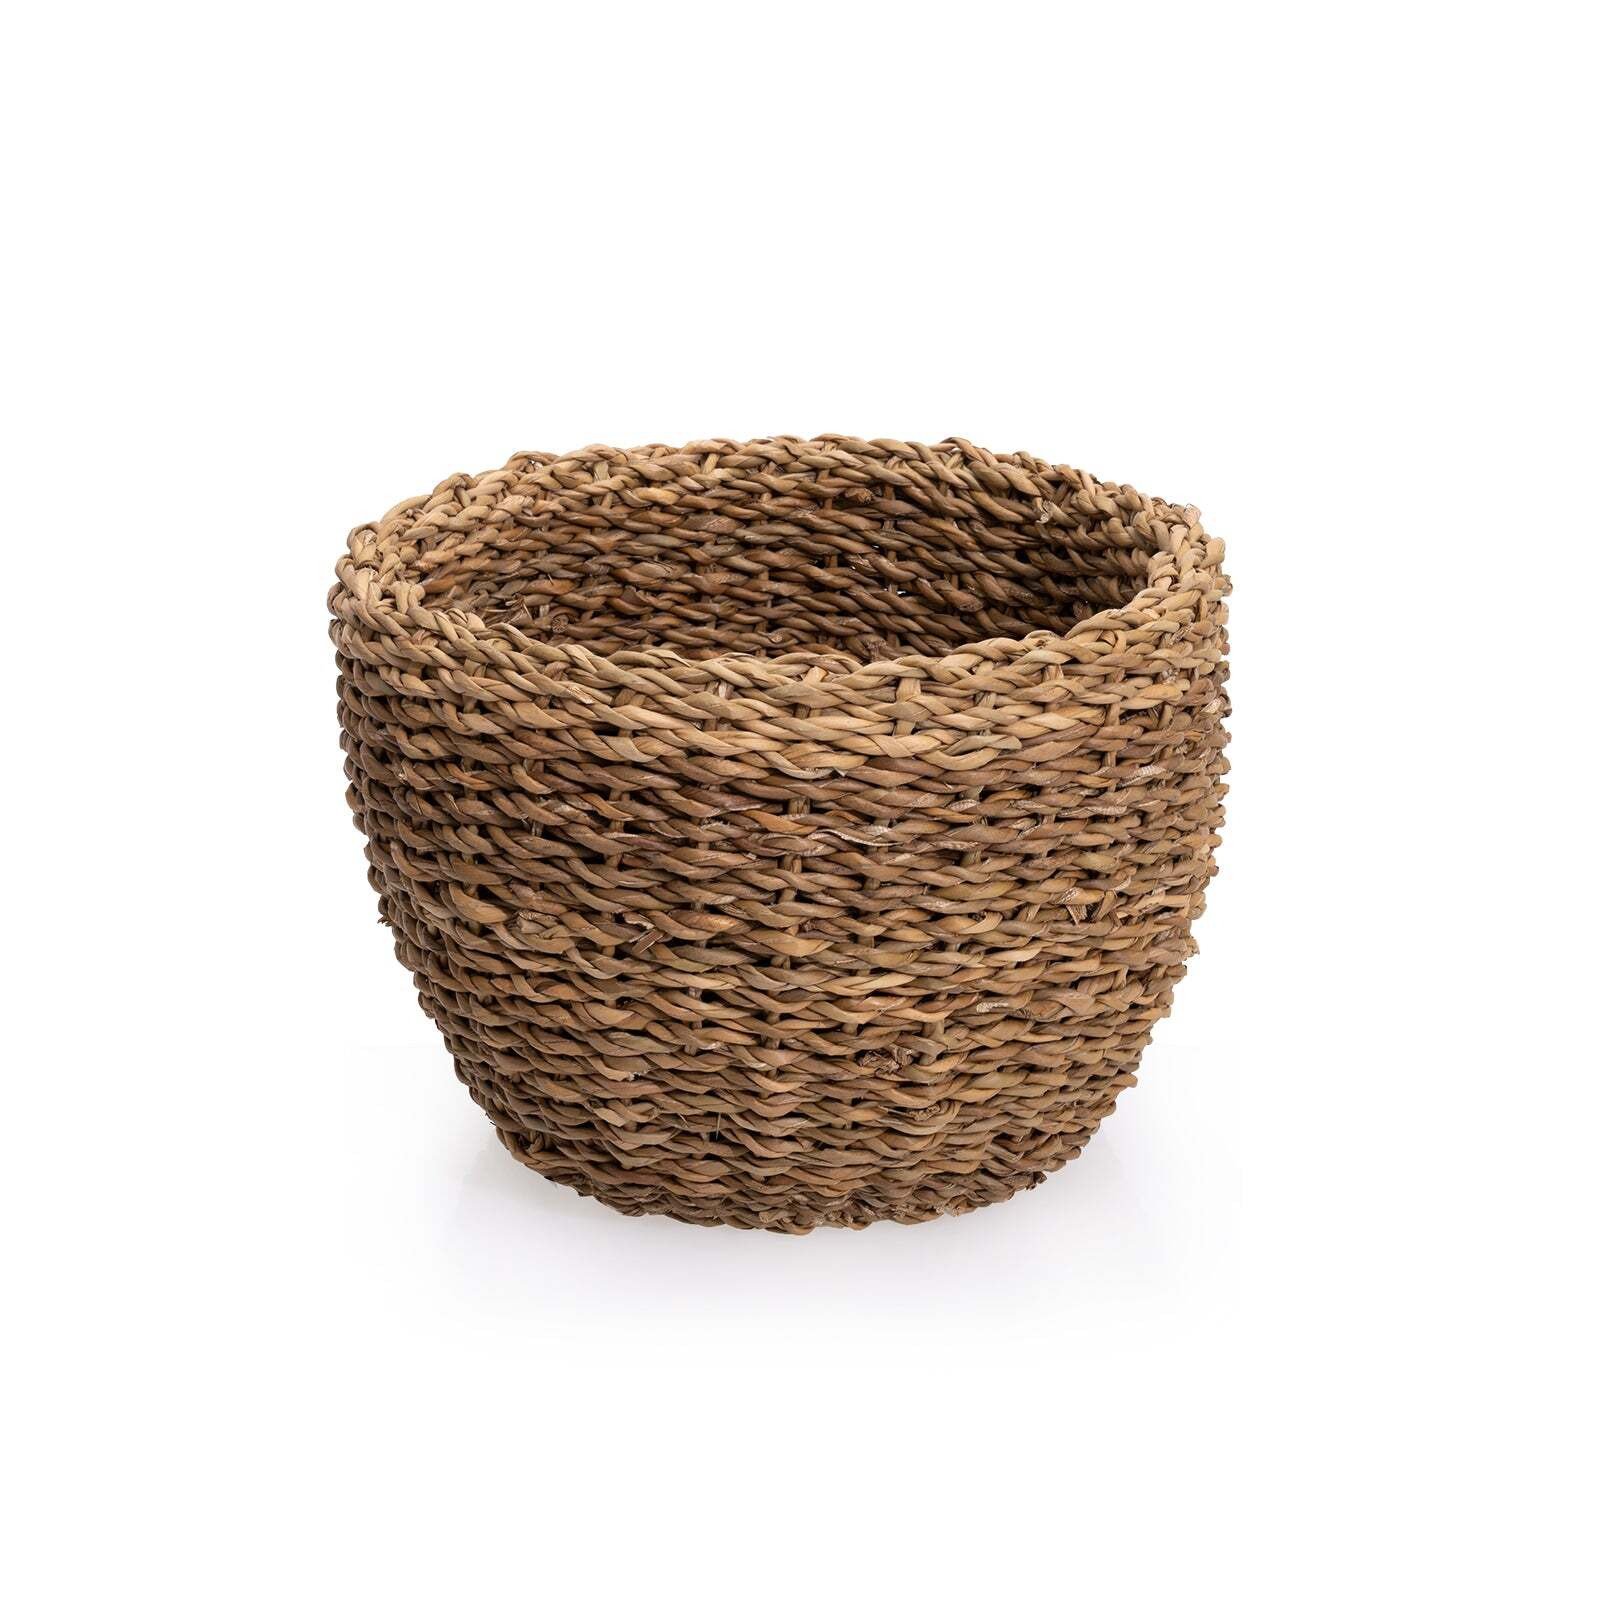 Georgia Natural Woven Seagrass Basket, S